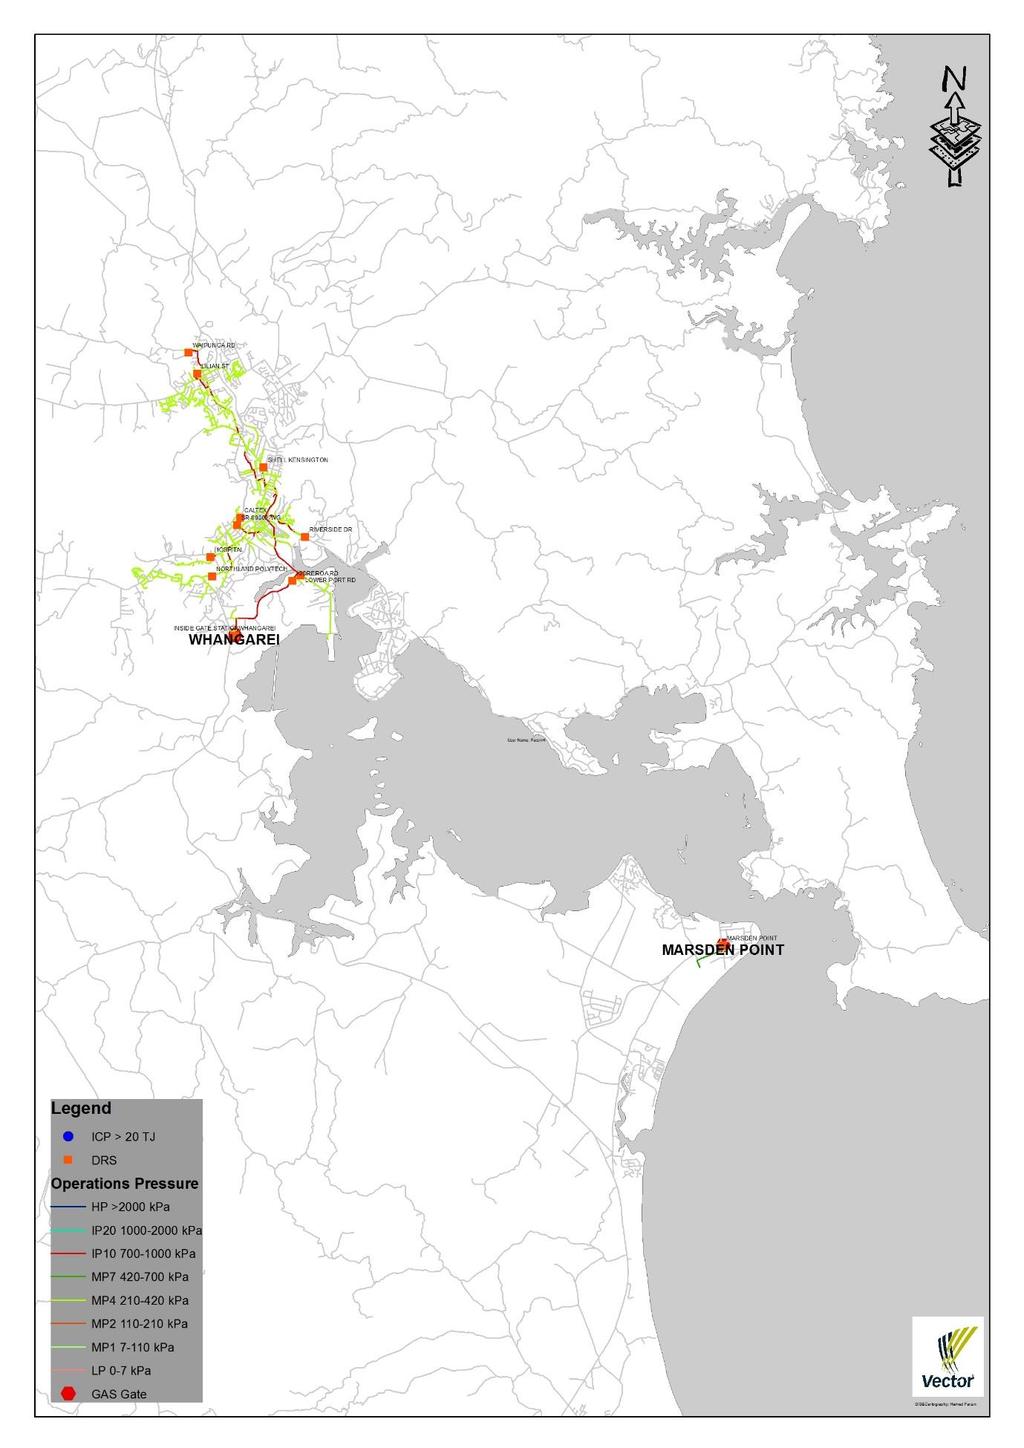 3.9 Gas Distribution Maps 3.9.1 Northland Region